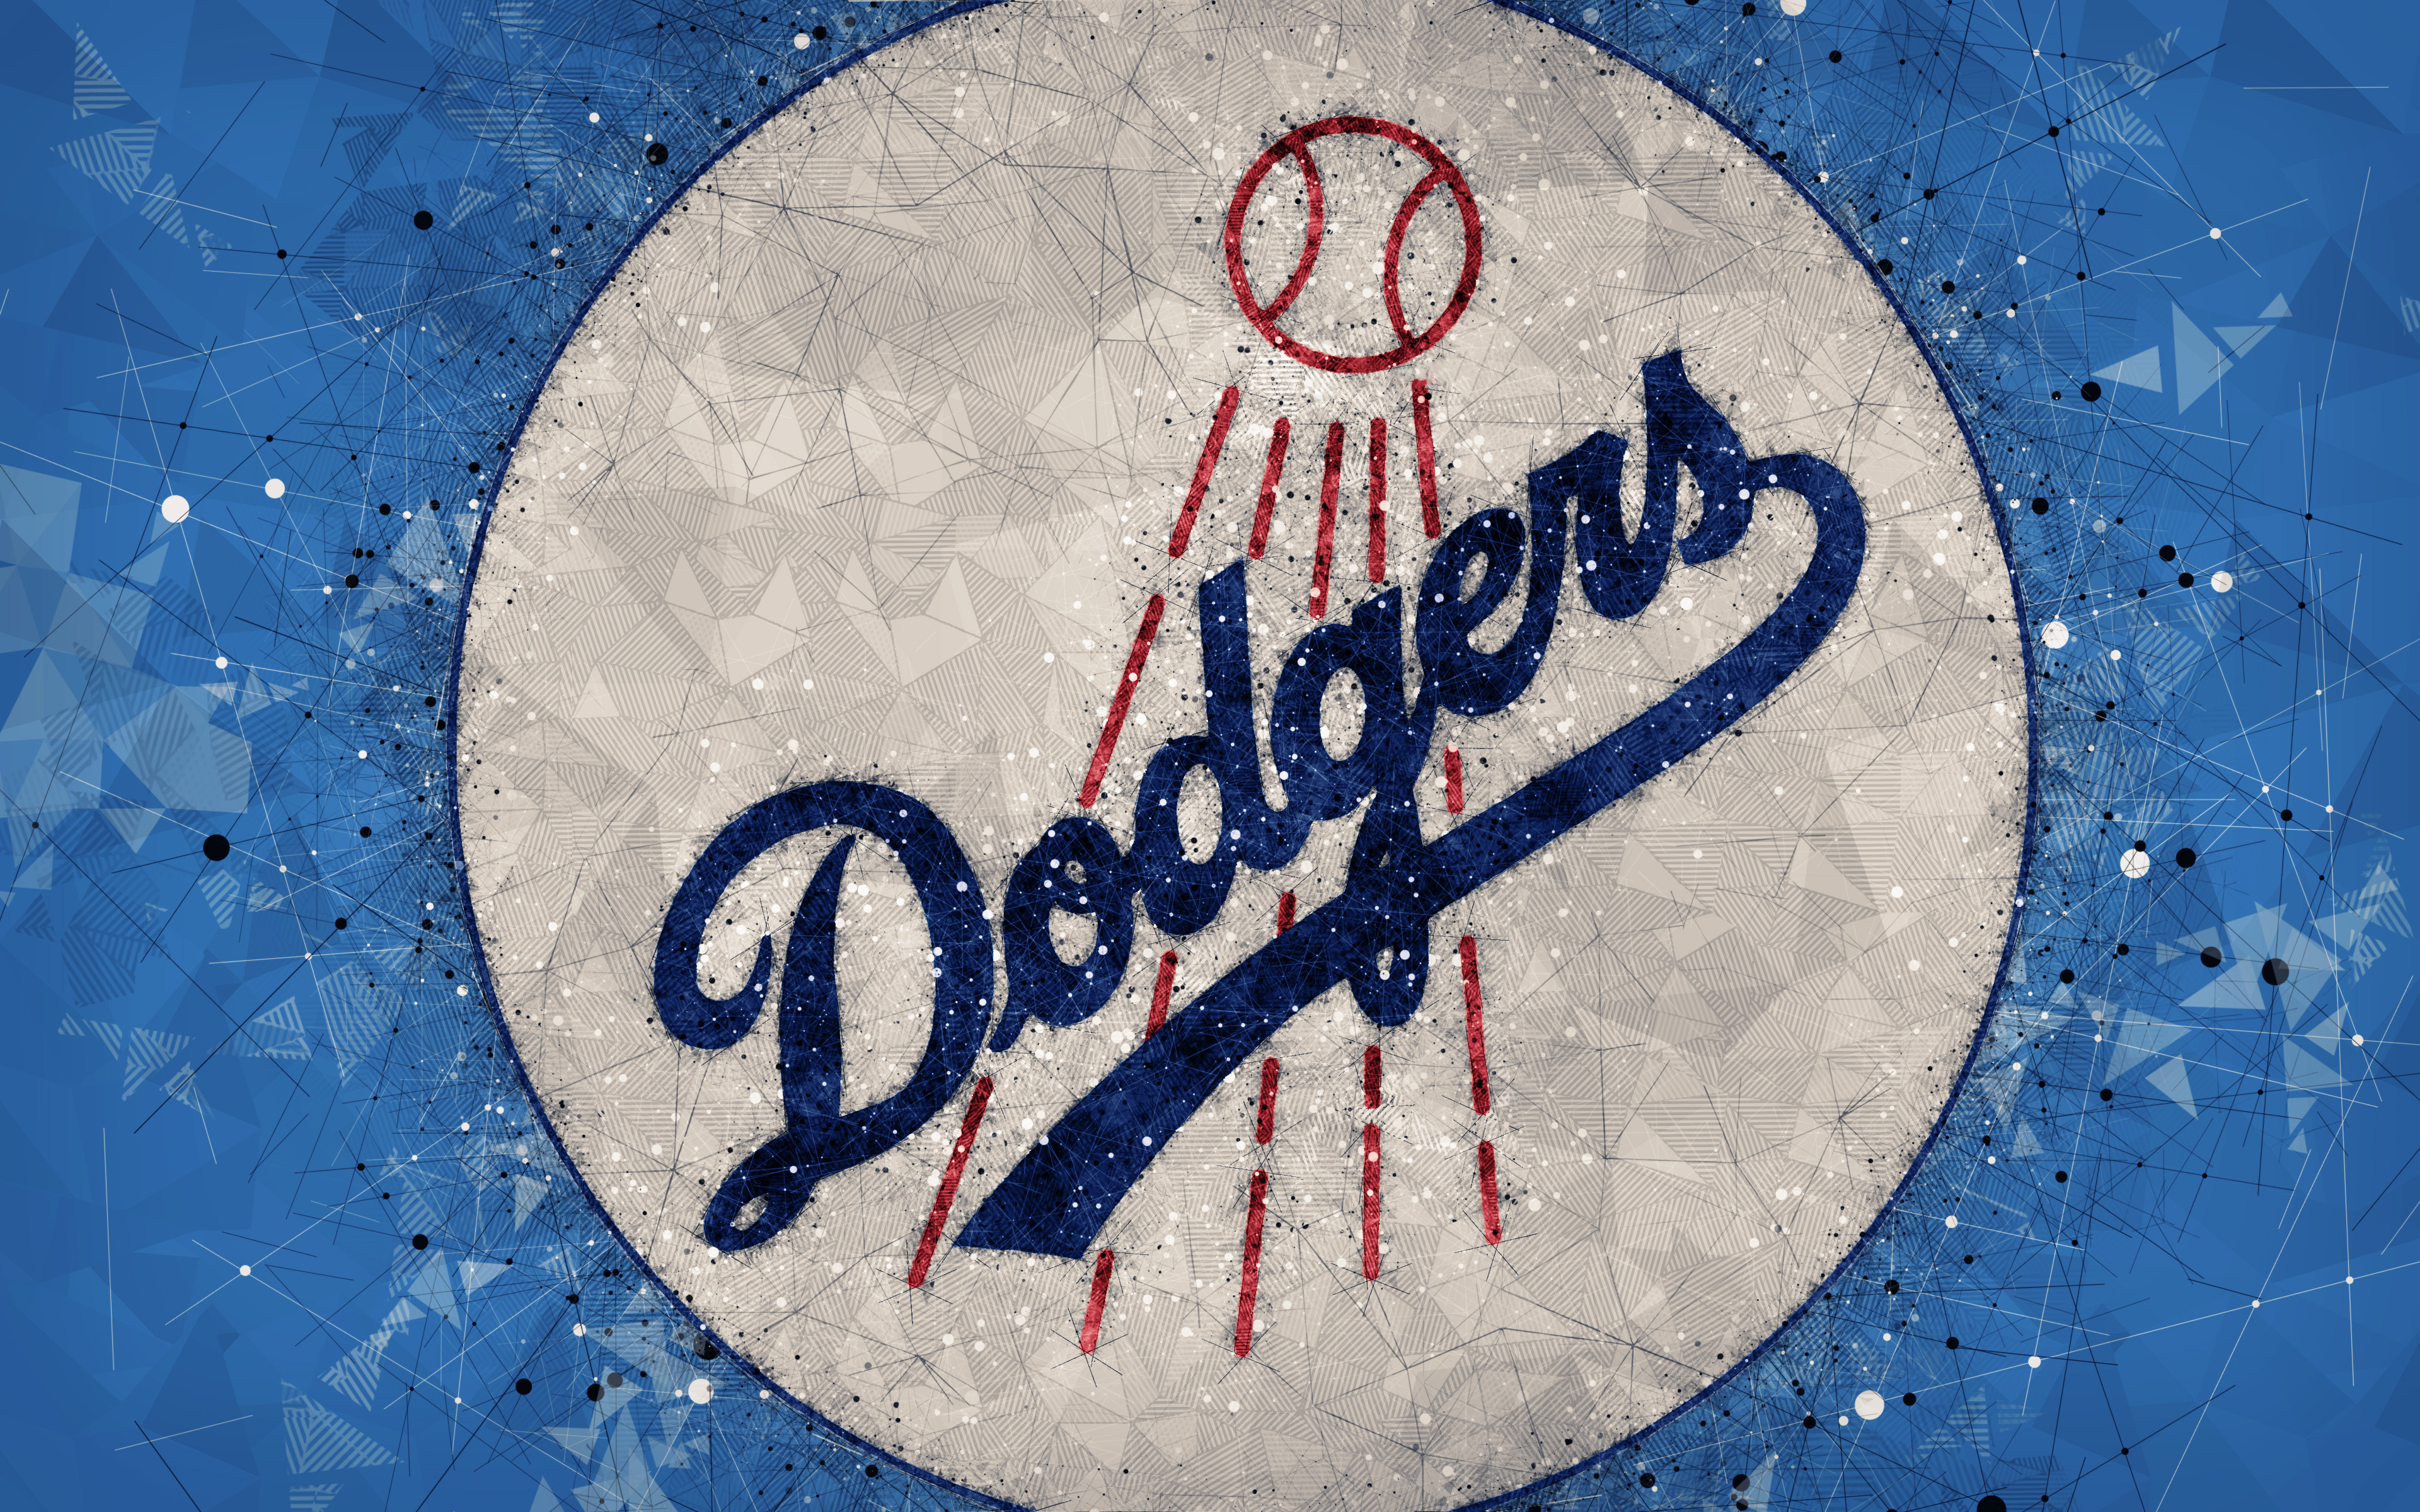 Download Dodgers Logo Small Baseball Red Wallpaper